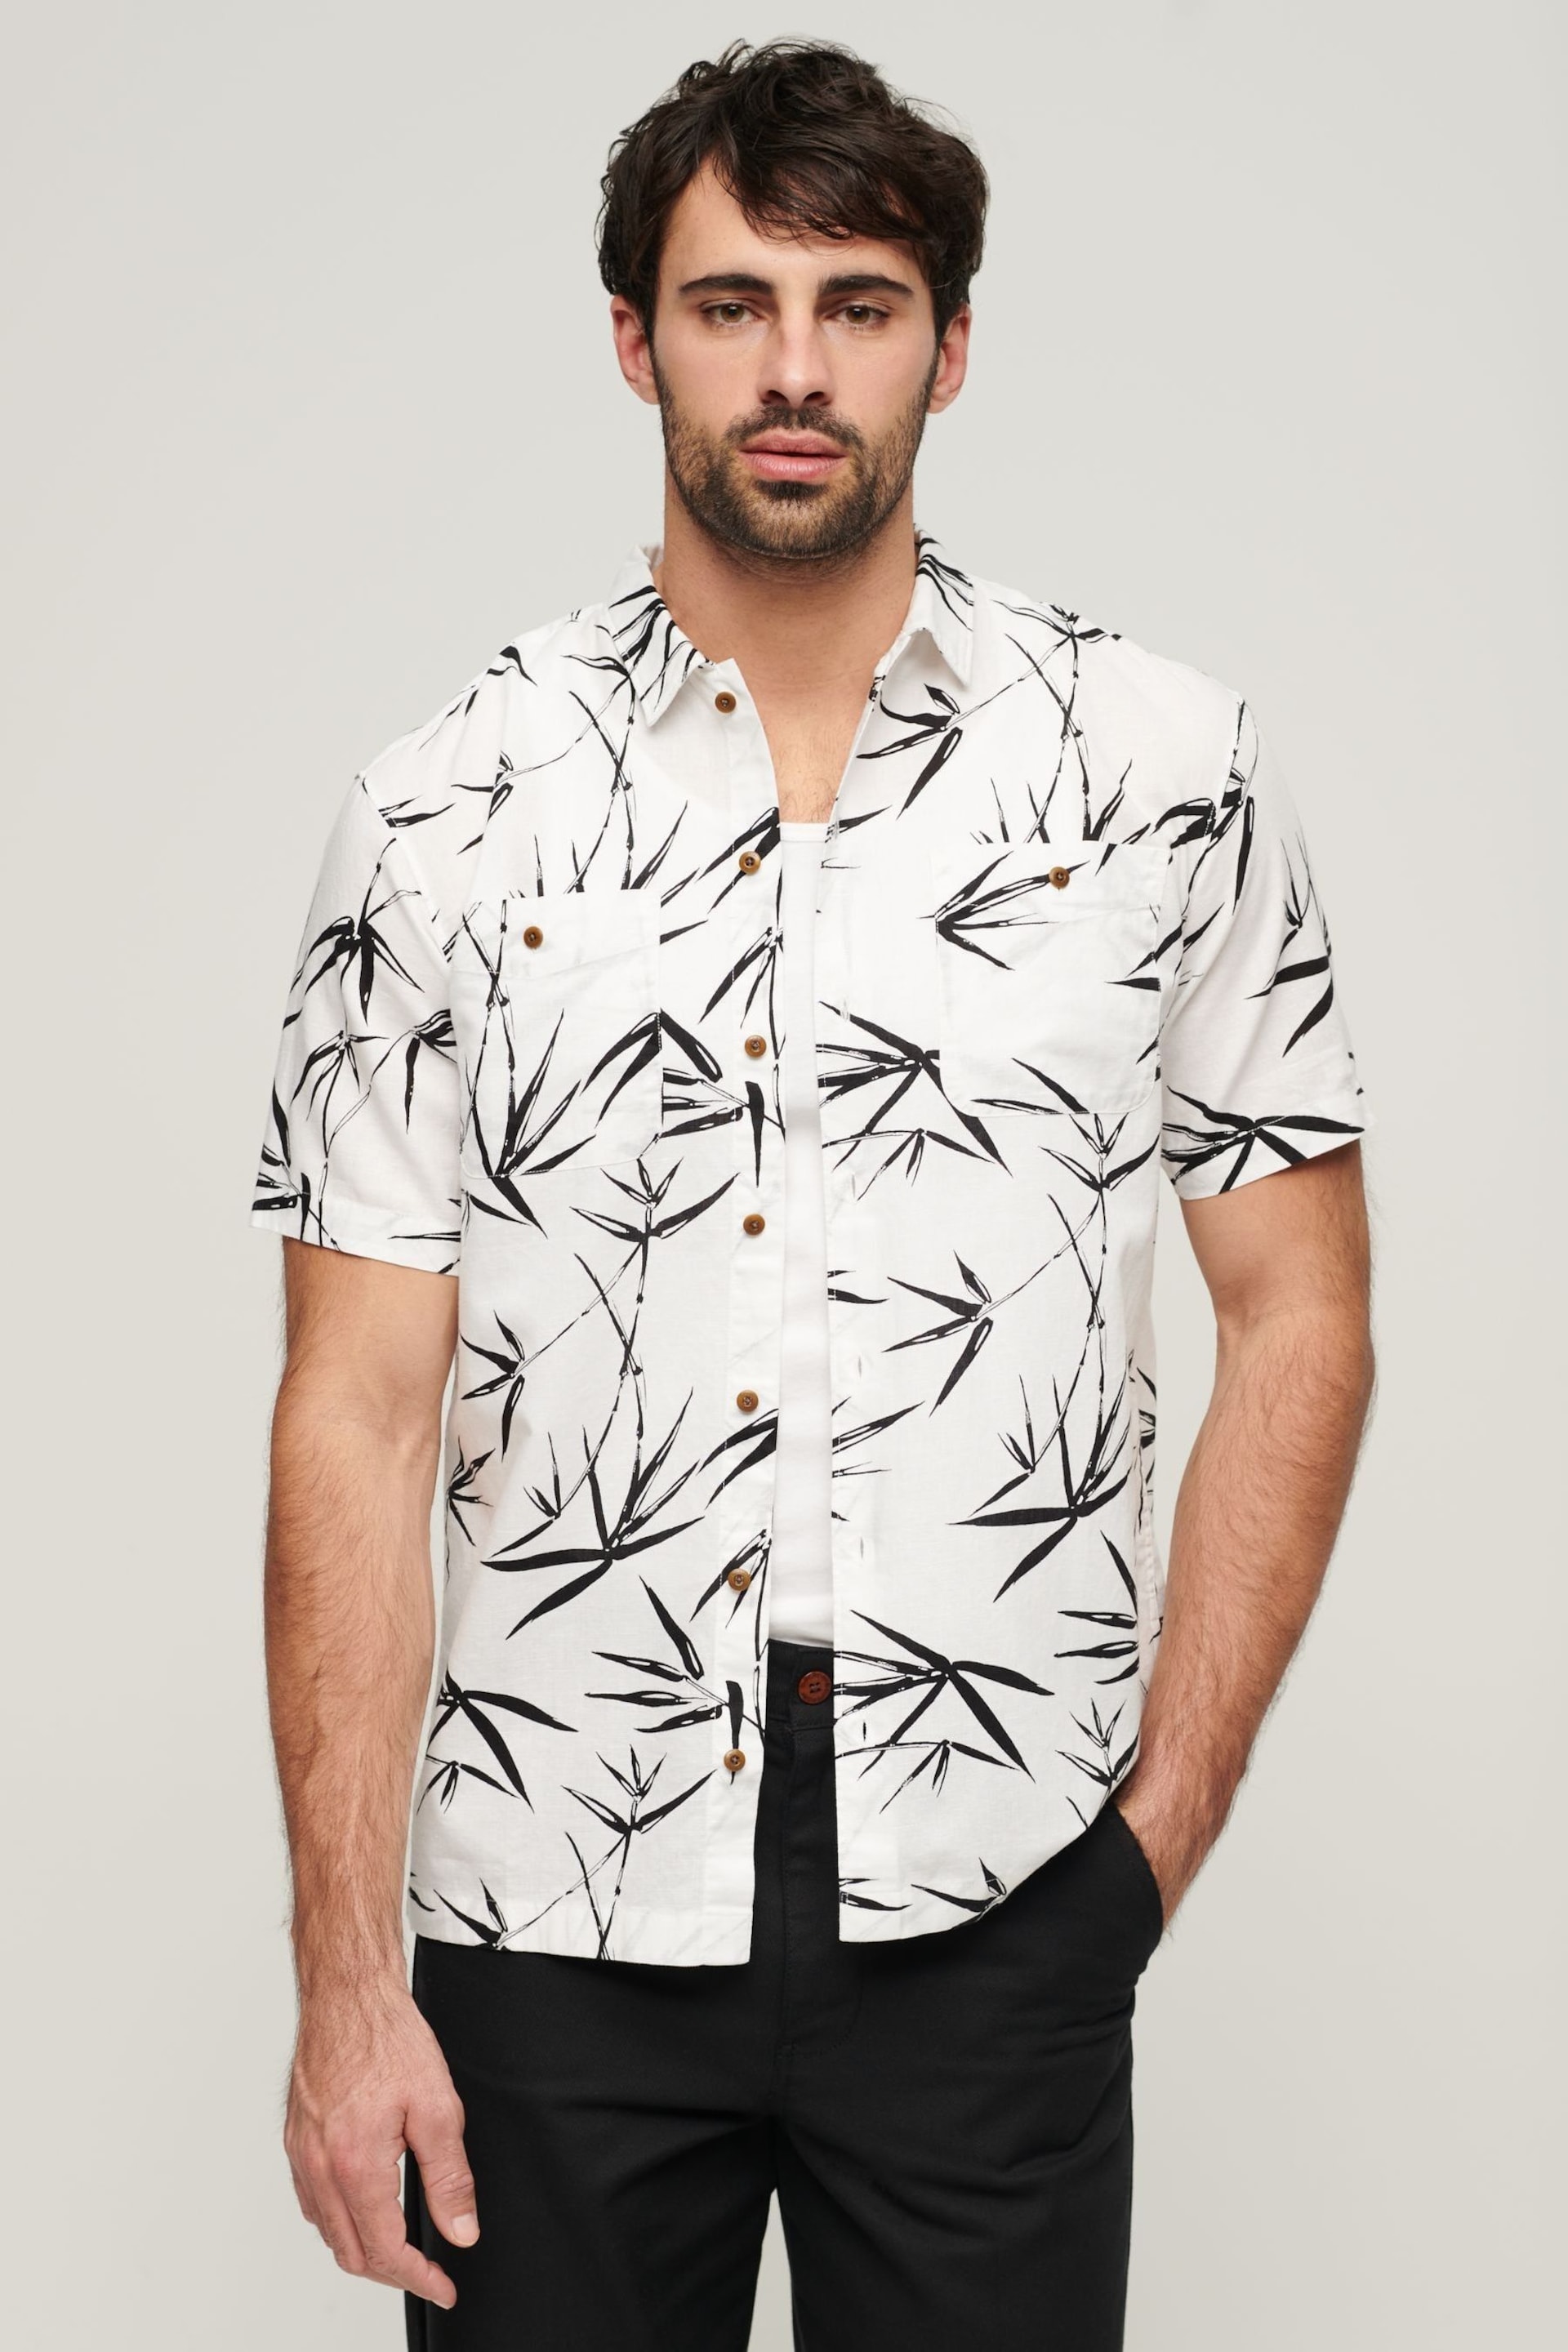 Superdry White/Black Short Sleeved Beach Shirt - Image 1 of 6